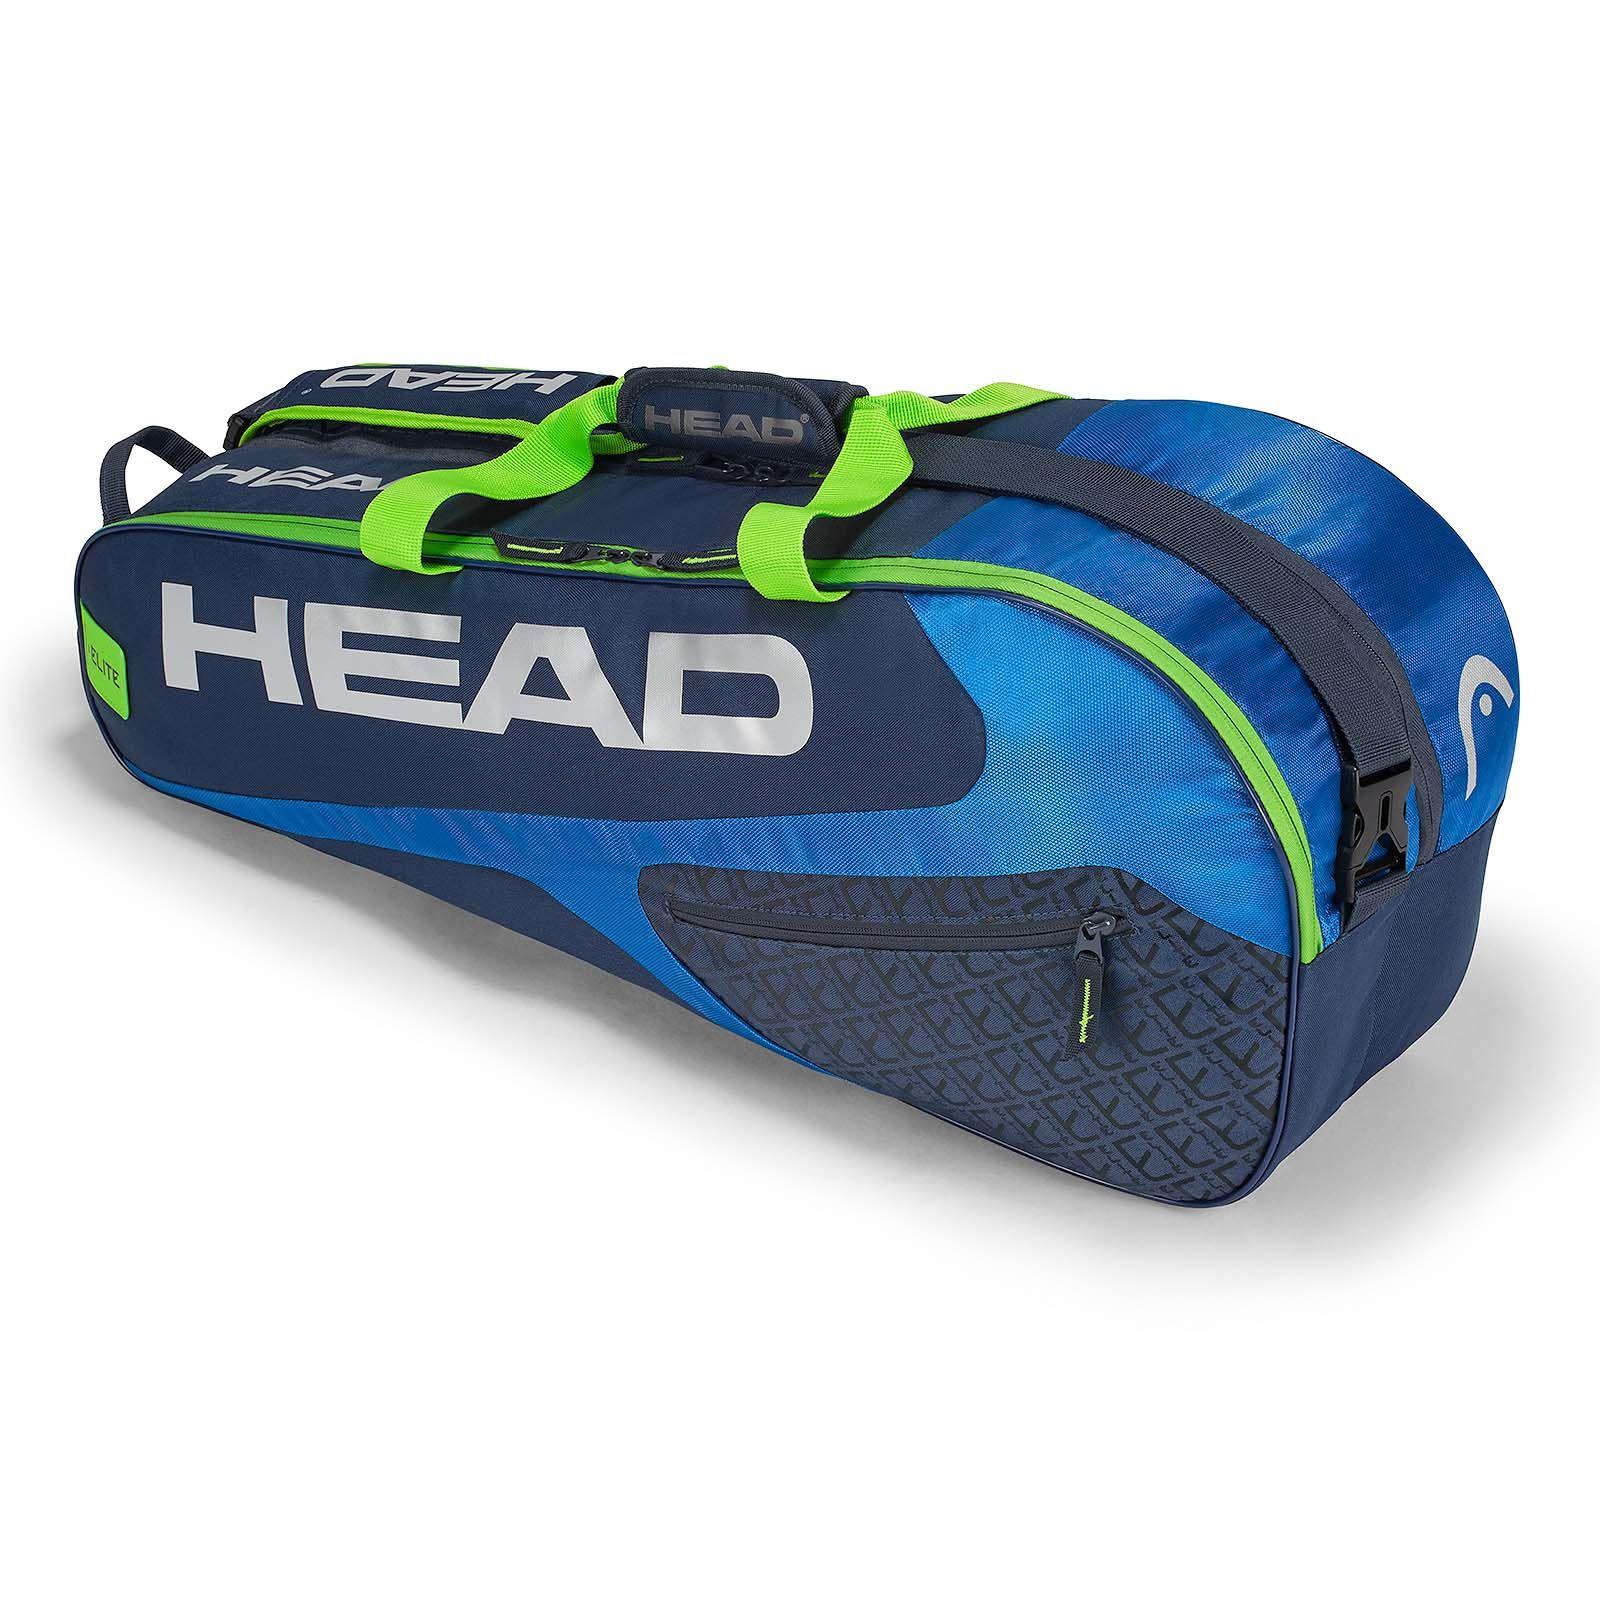 Head Elite 6R Combi Racket Bag